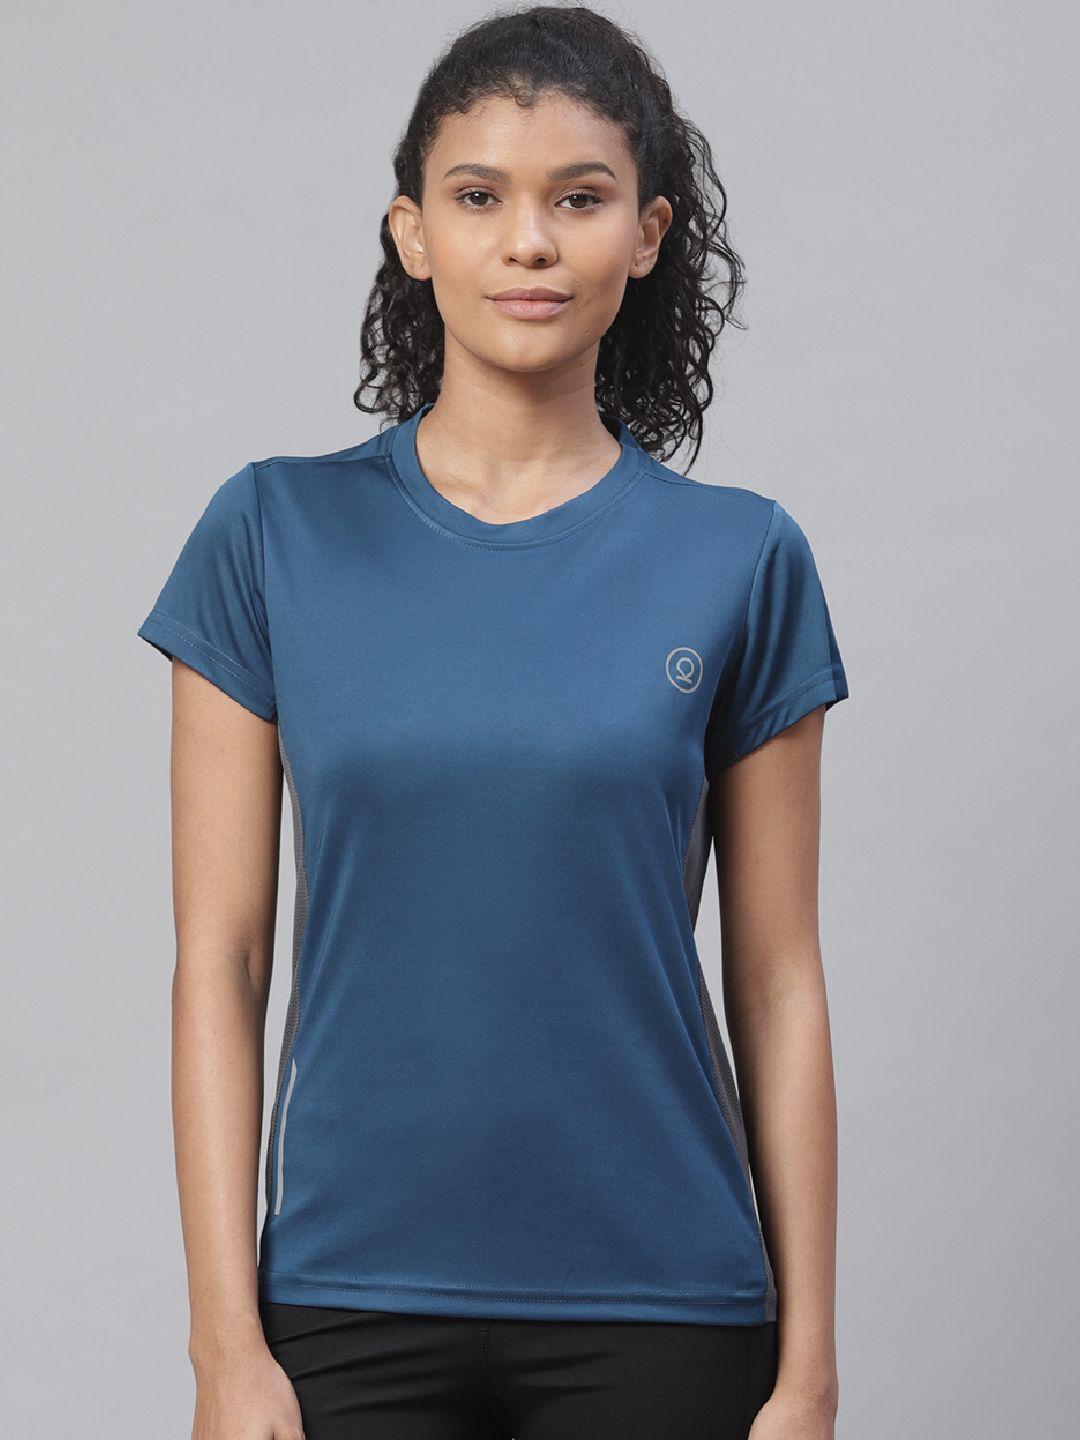 chkokko-women-teal-blue-solid-round-neck-yoga-t-shirt